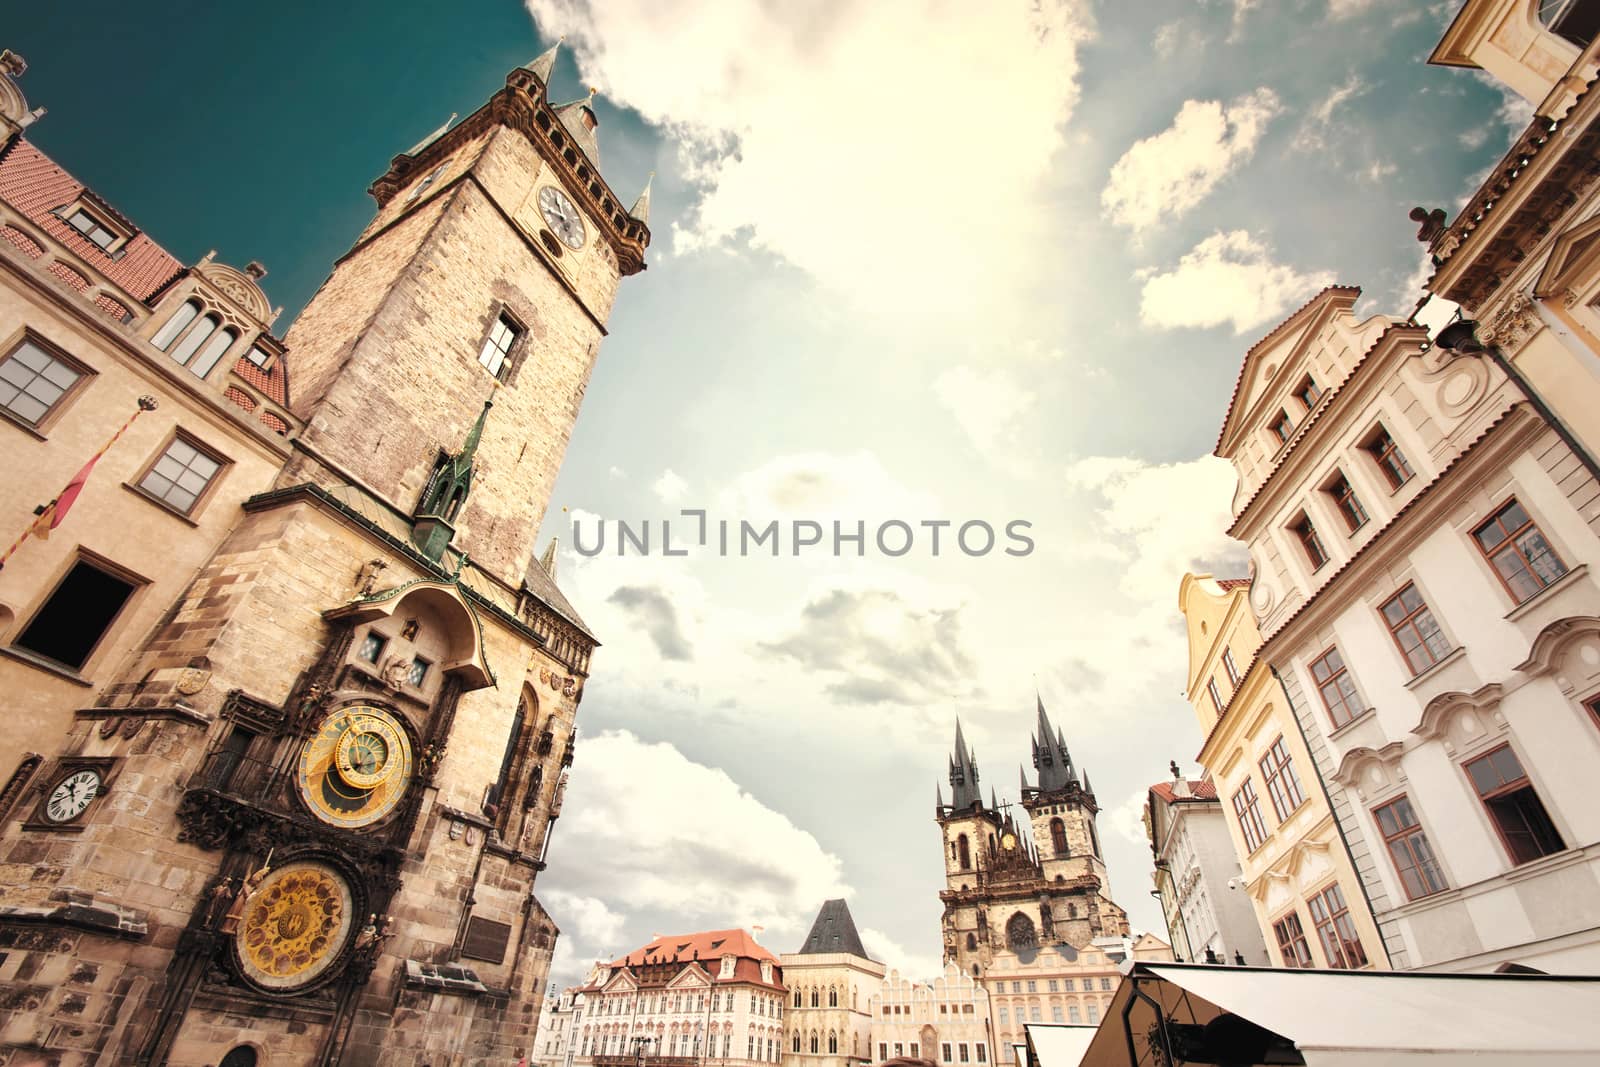 Prague. Old Town Hall with Orloj Astronomical Clock and Tyn Church.